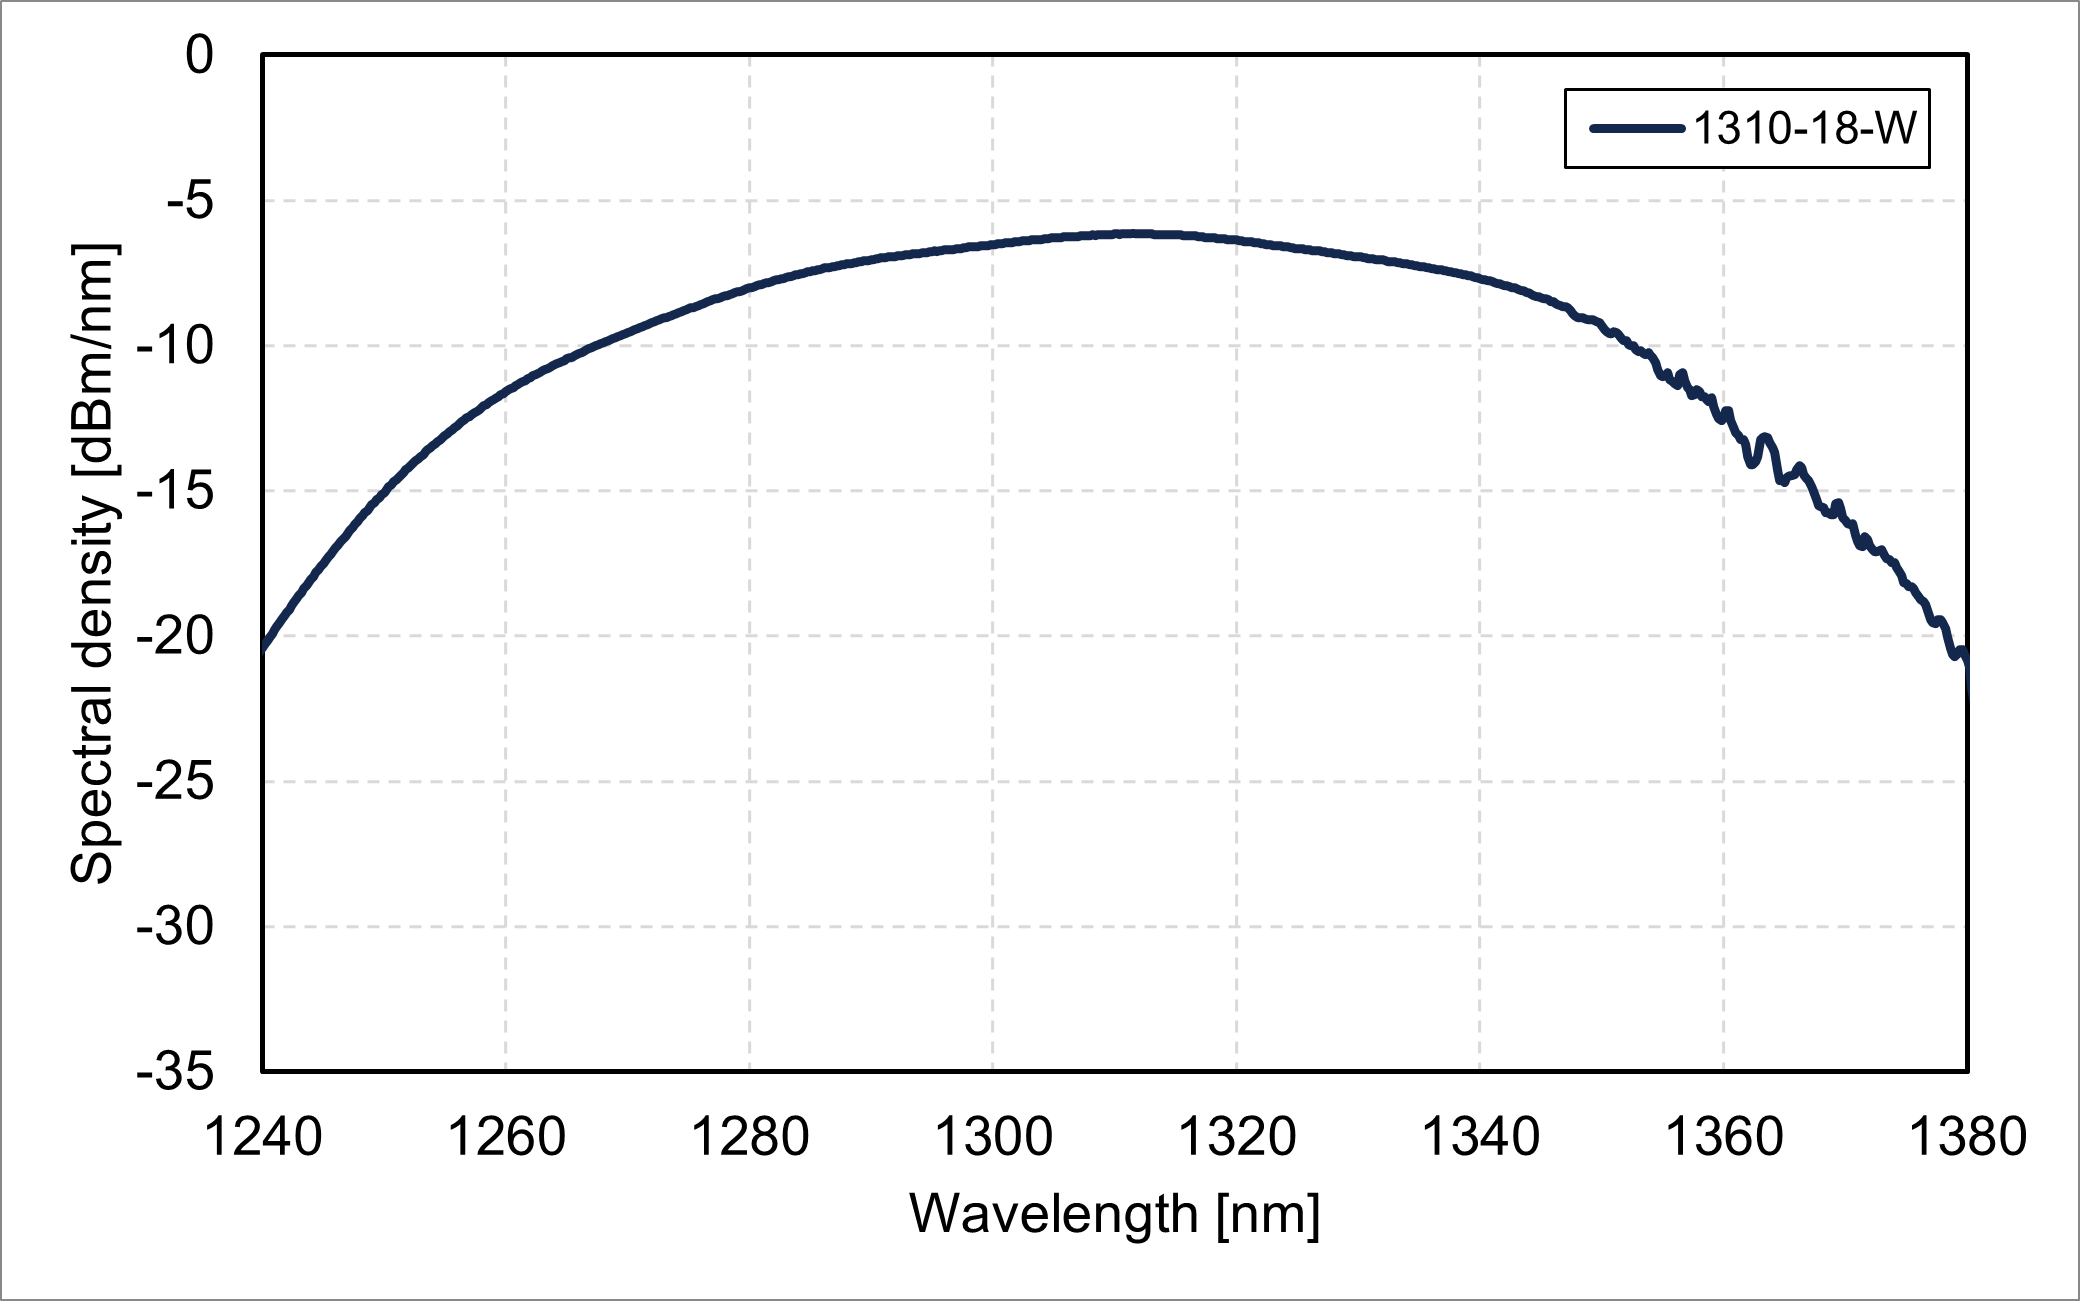 Spectral density vs. wavelength (1310-18-W)